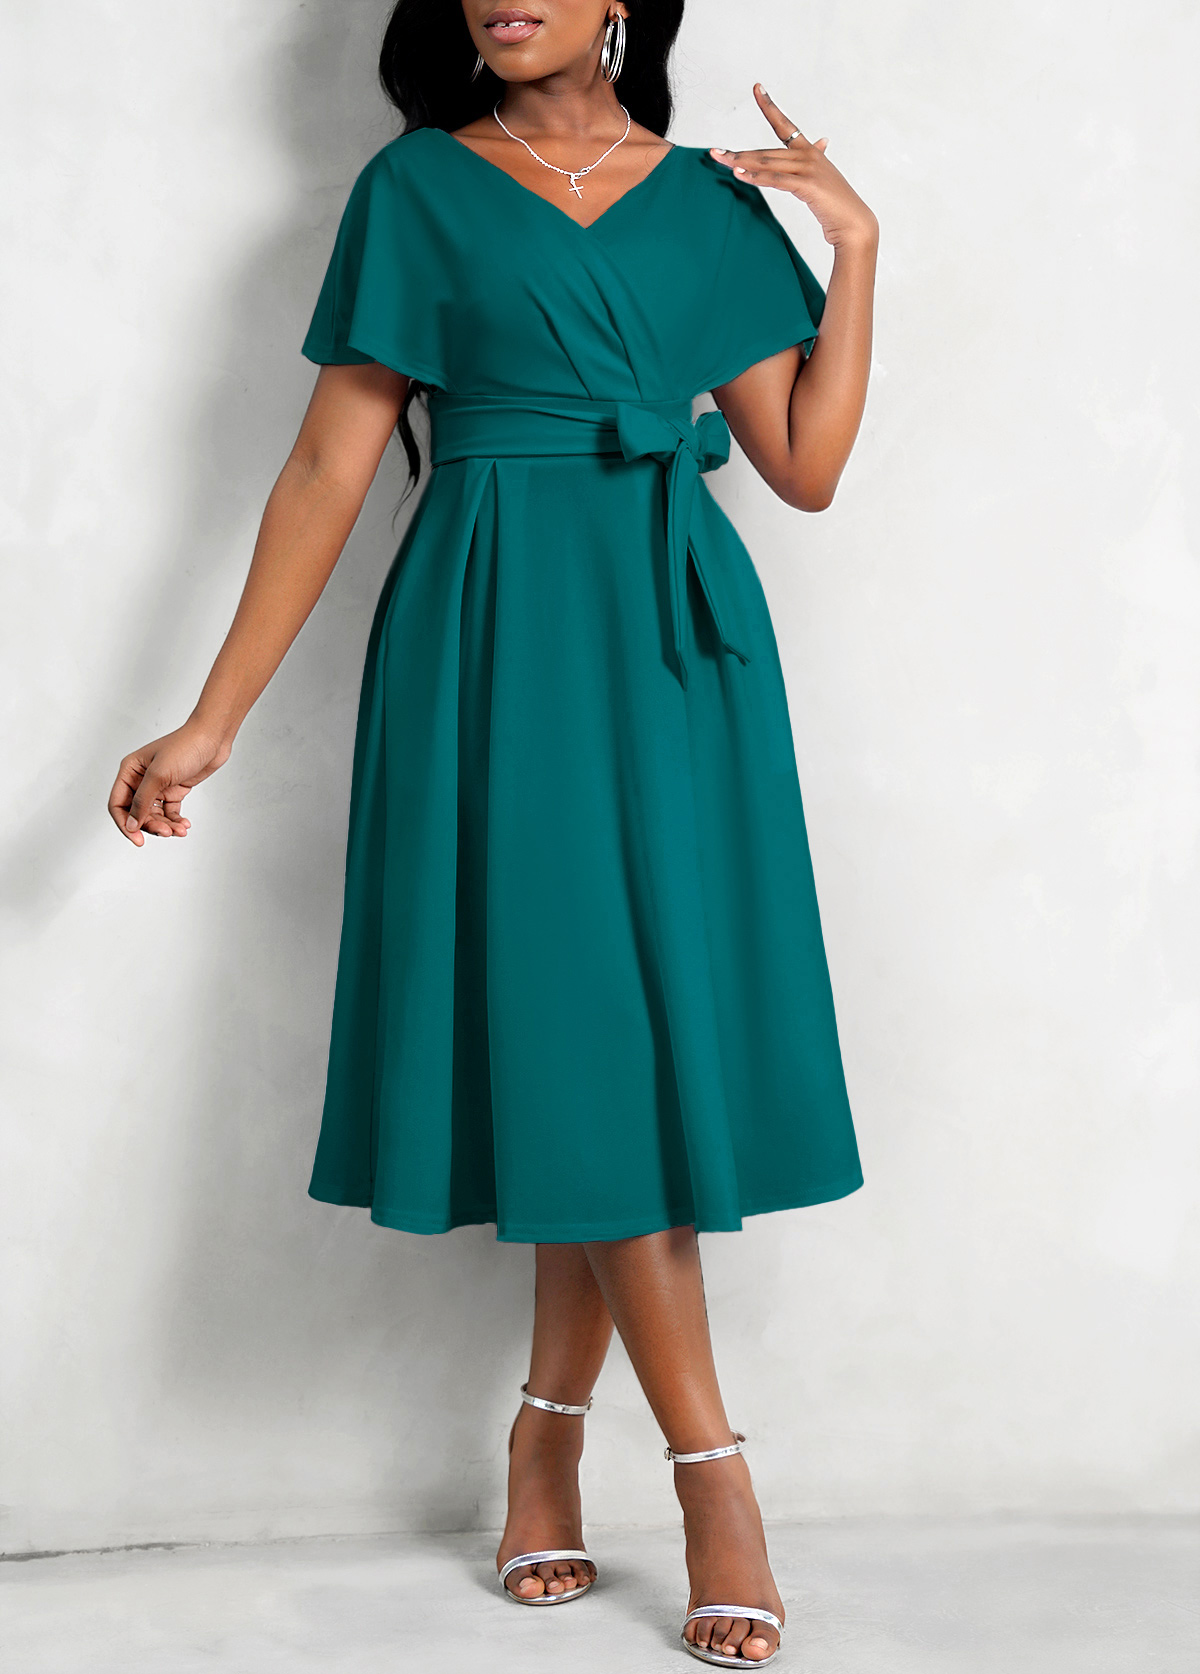 Short Sleeve V Neck Turquoise Belted Dress